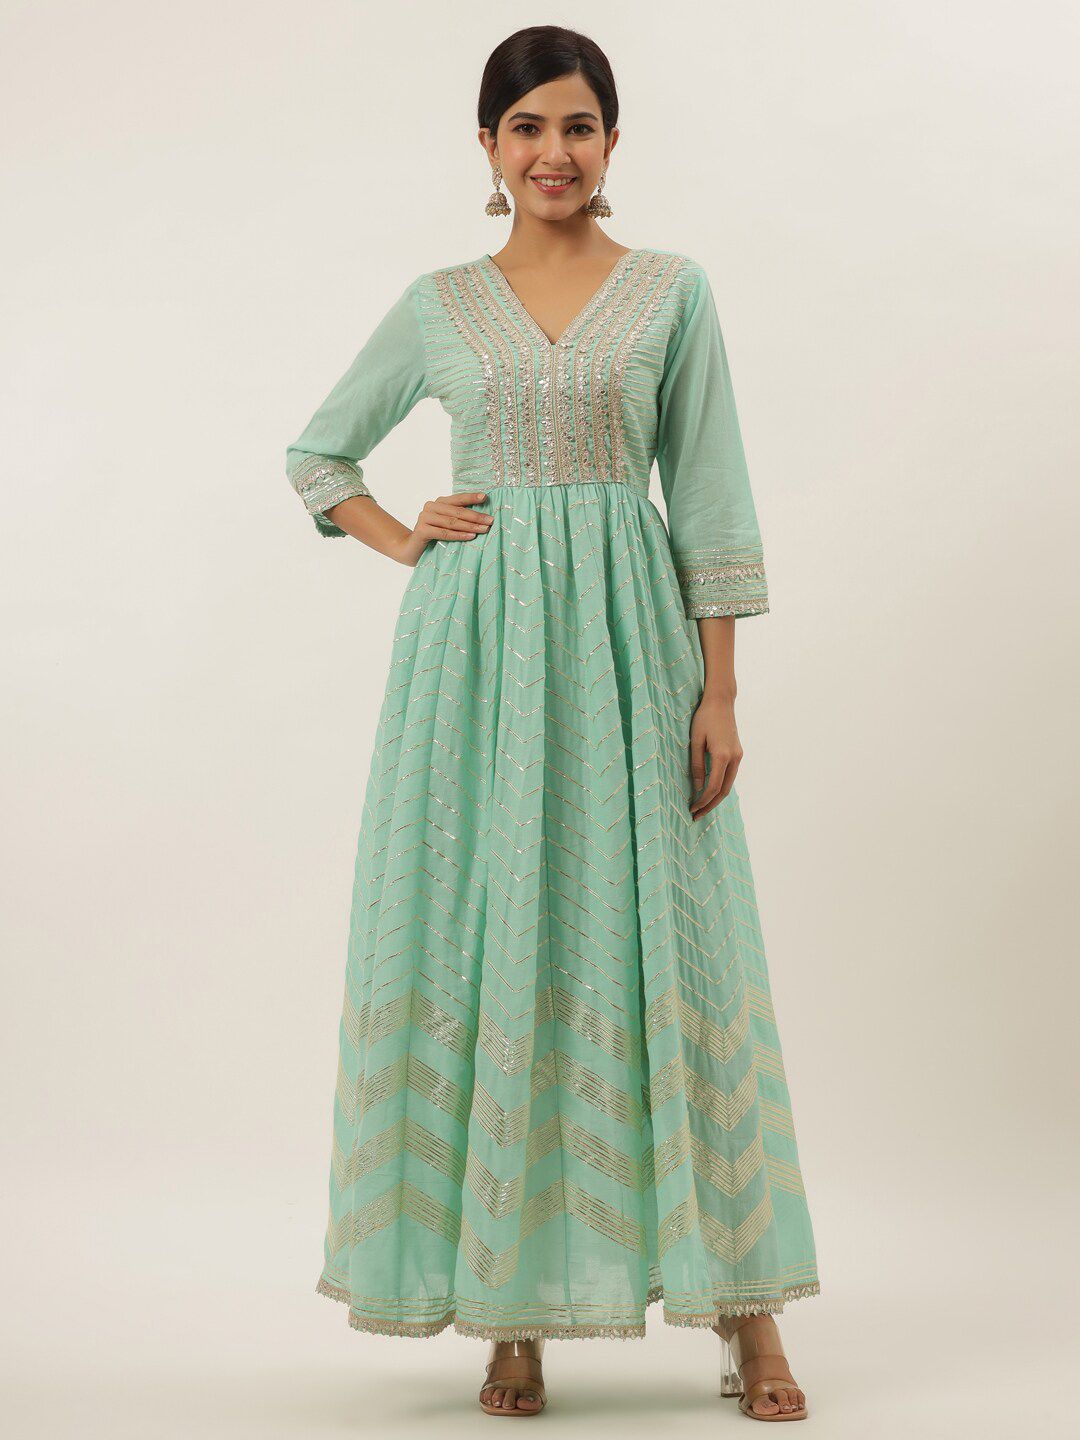 Yufta Green Cotton Ethnic Maxi Dress Price in India